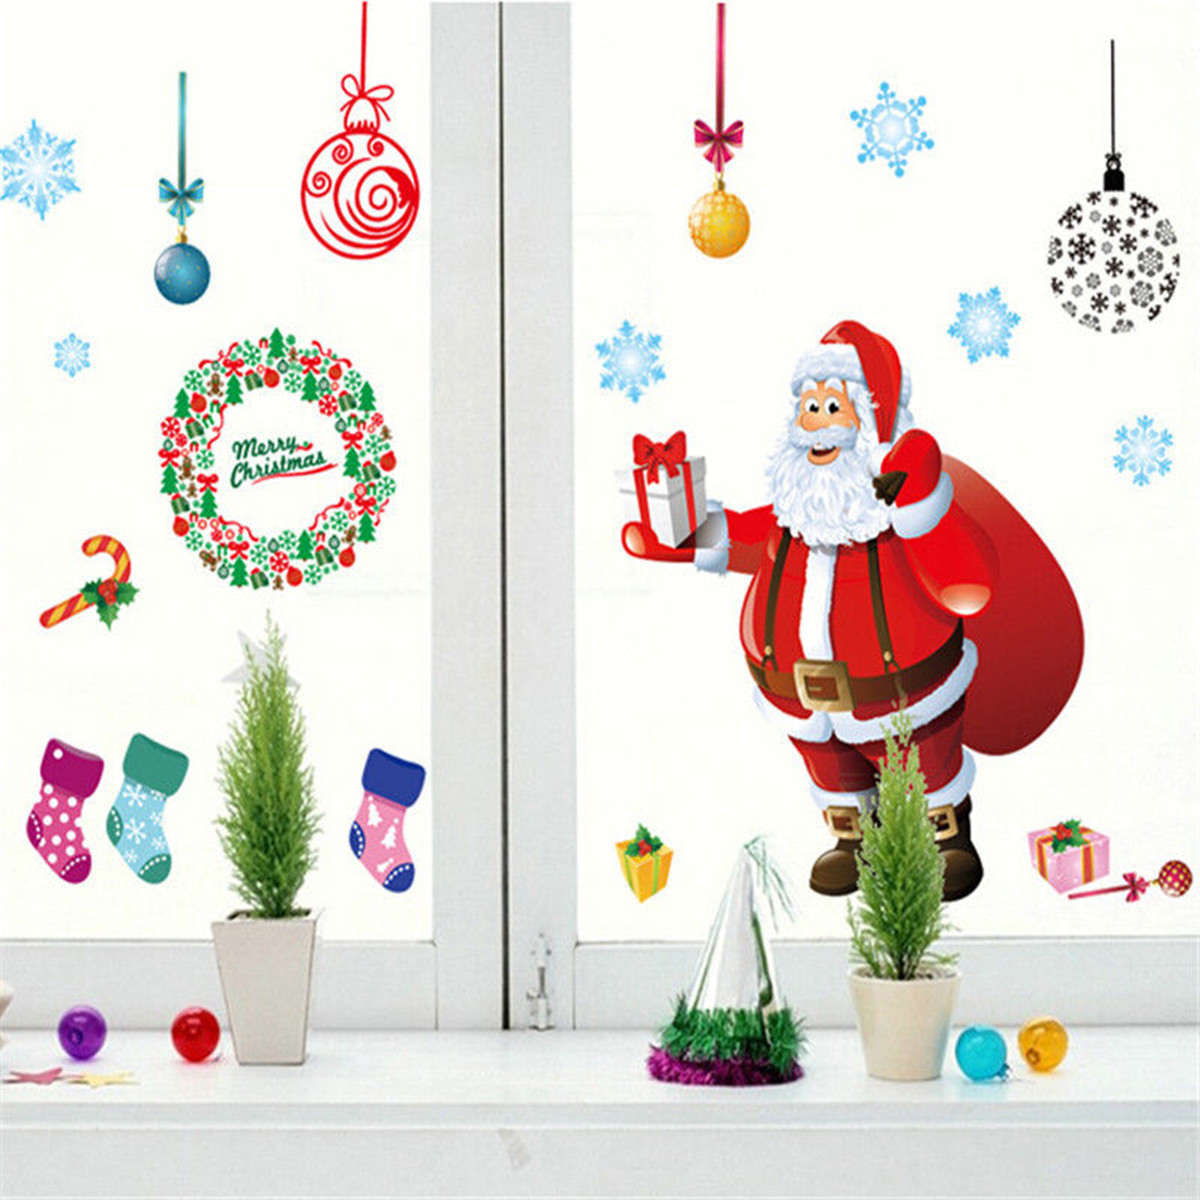 Christmas-Tree-Wall-Sticker-Santa-Claus-Gift-Wall-Art-Window-Home-Decoration-1086741-1